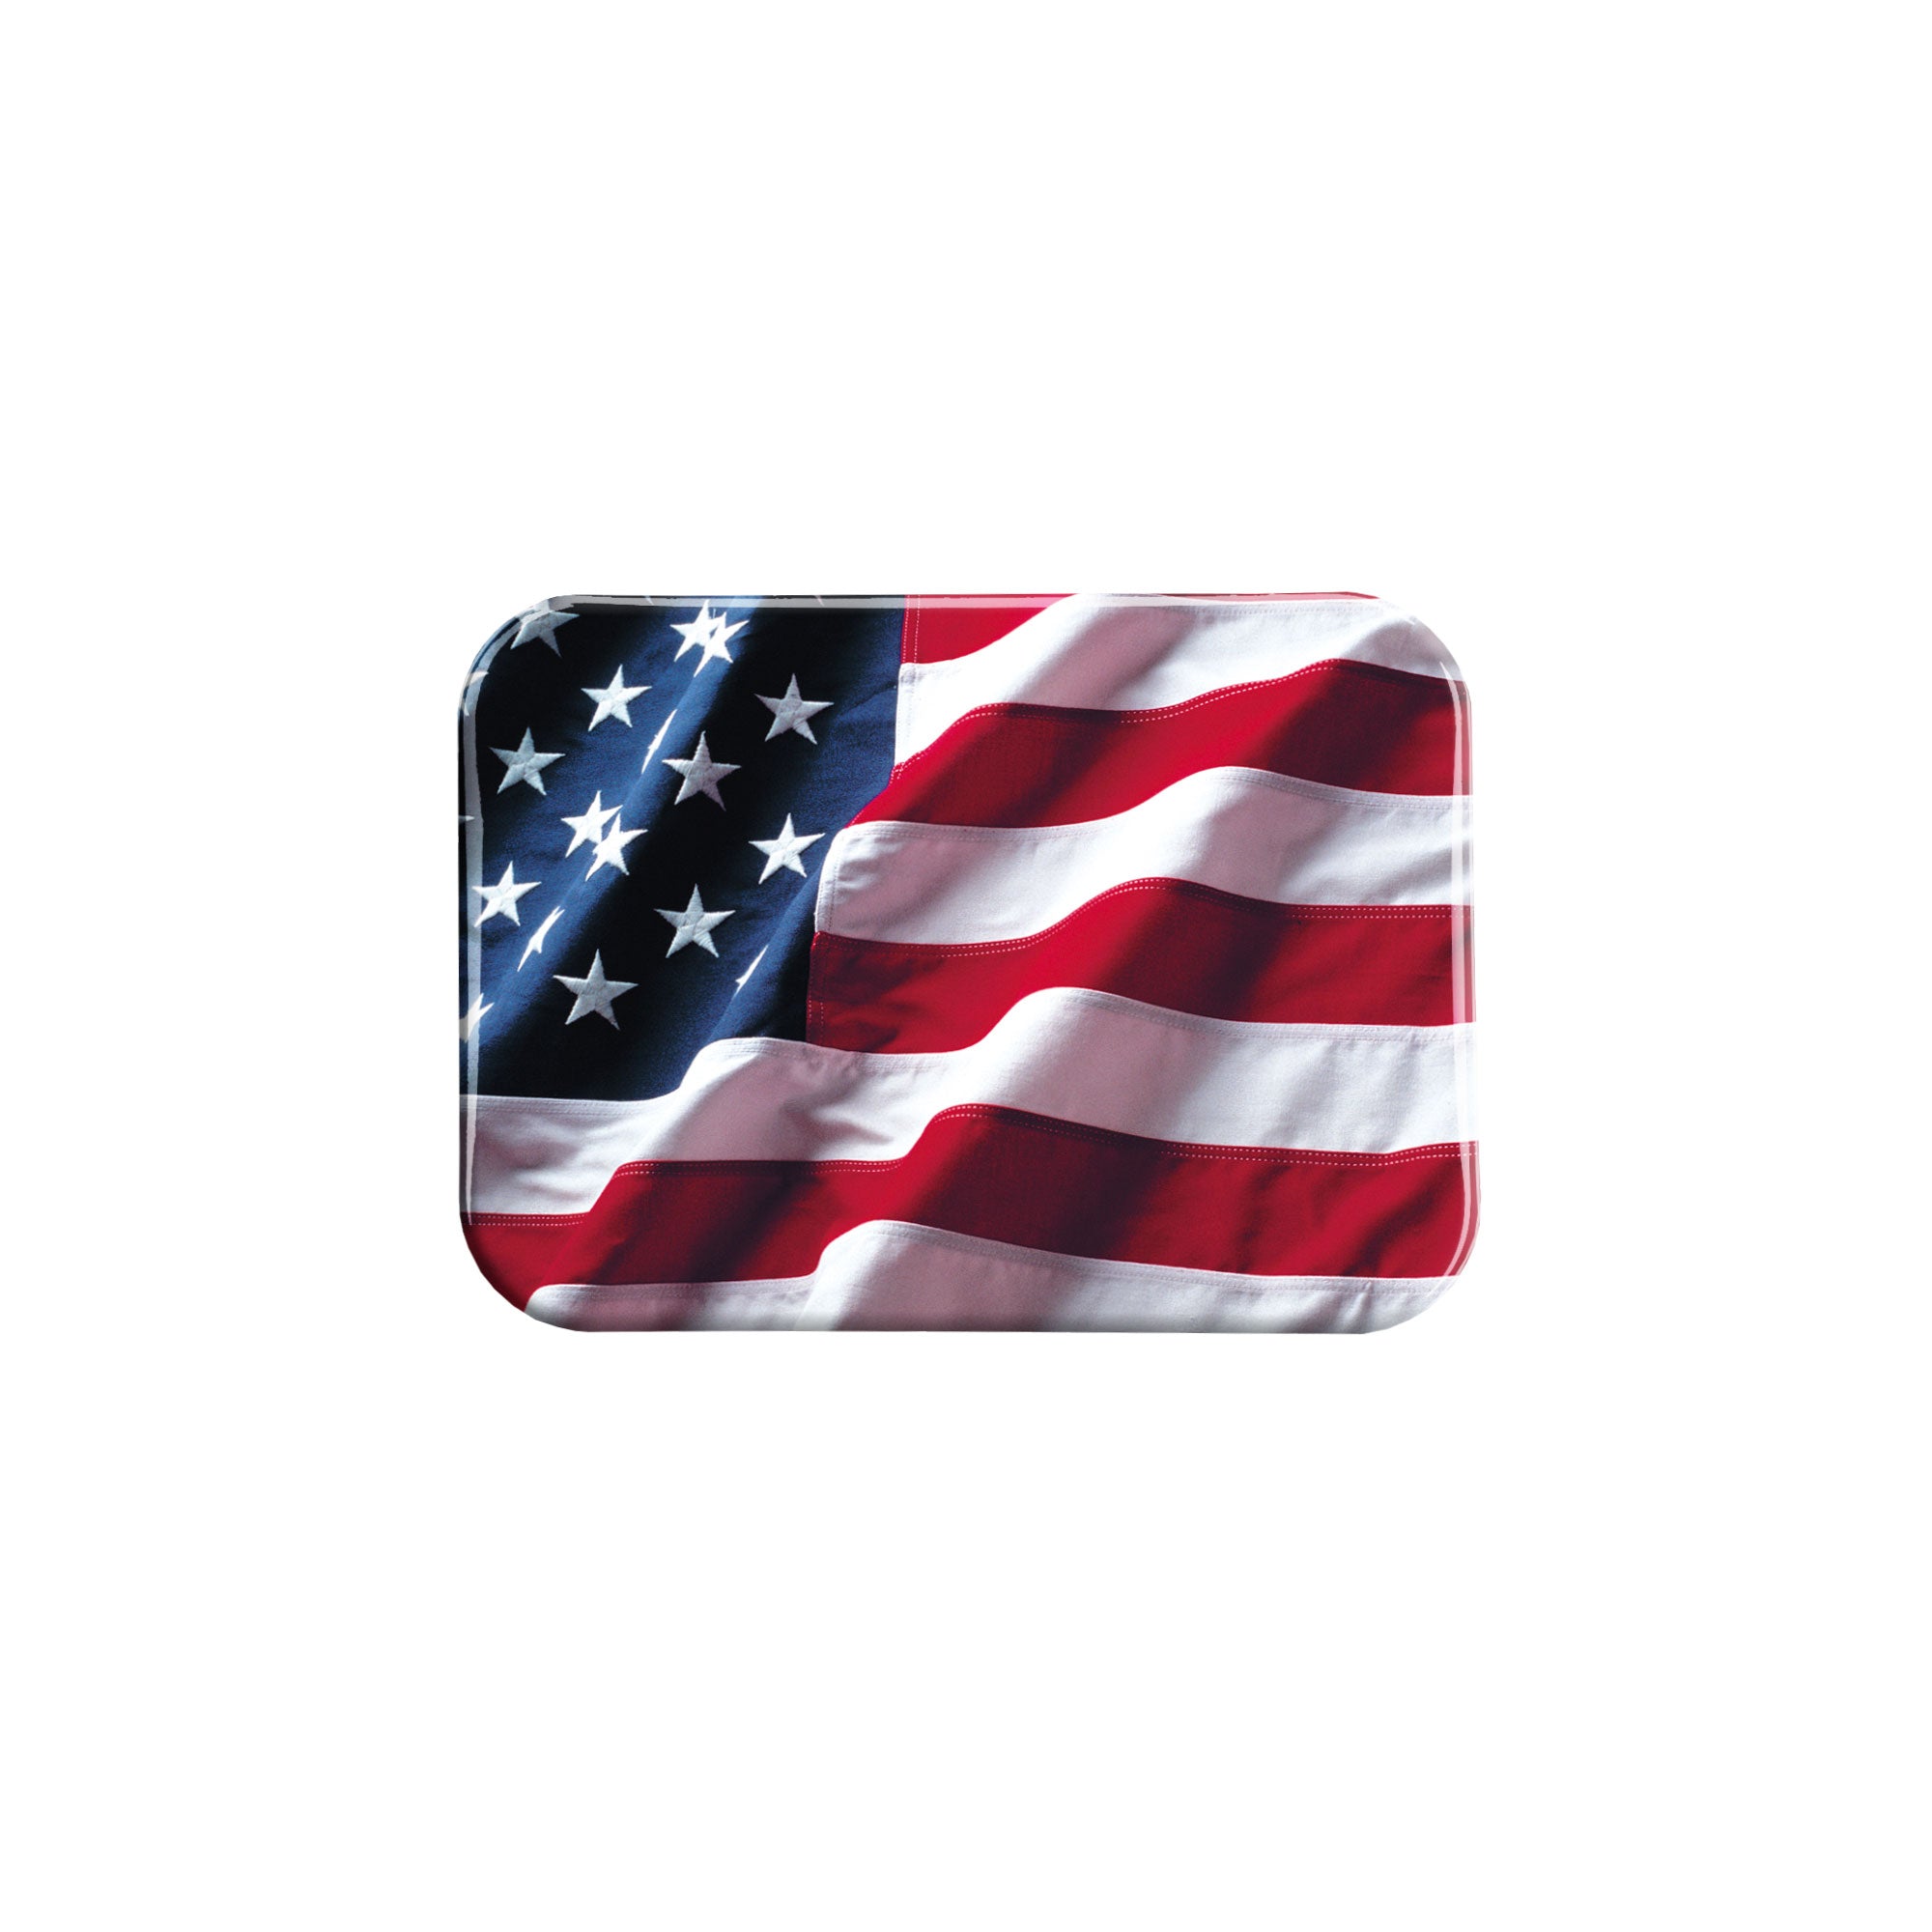 "American Flag" - 2.5" X 3.5" Rectangle Fridge Magnets